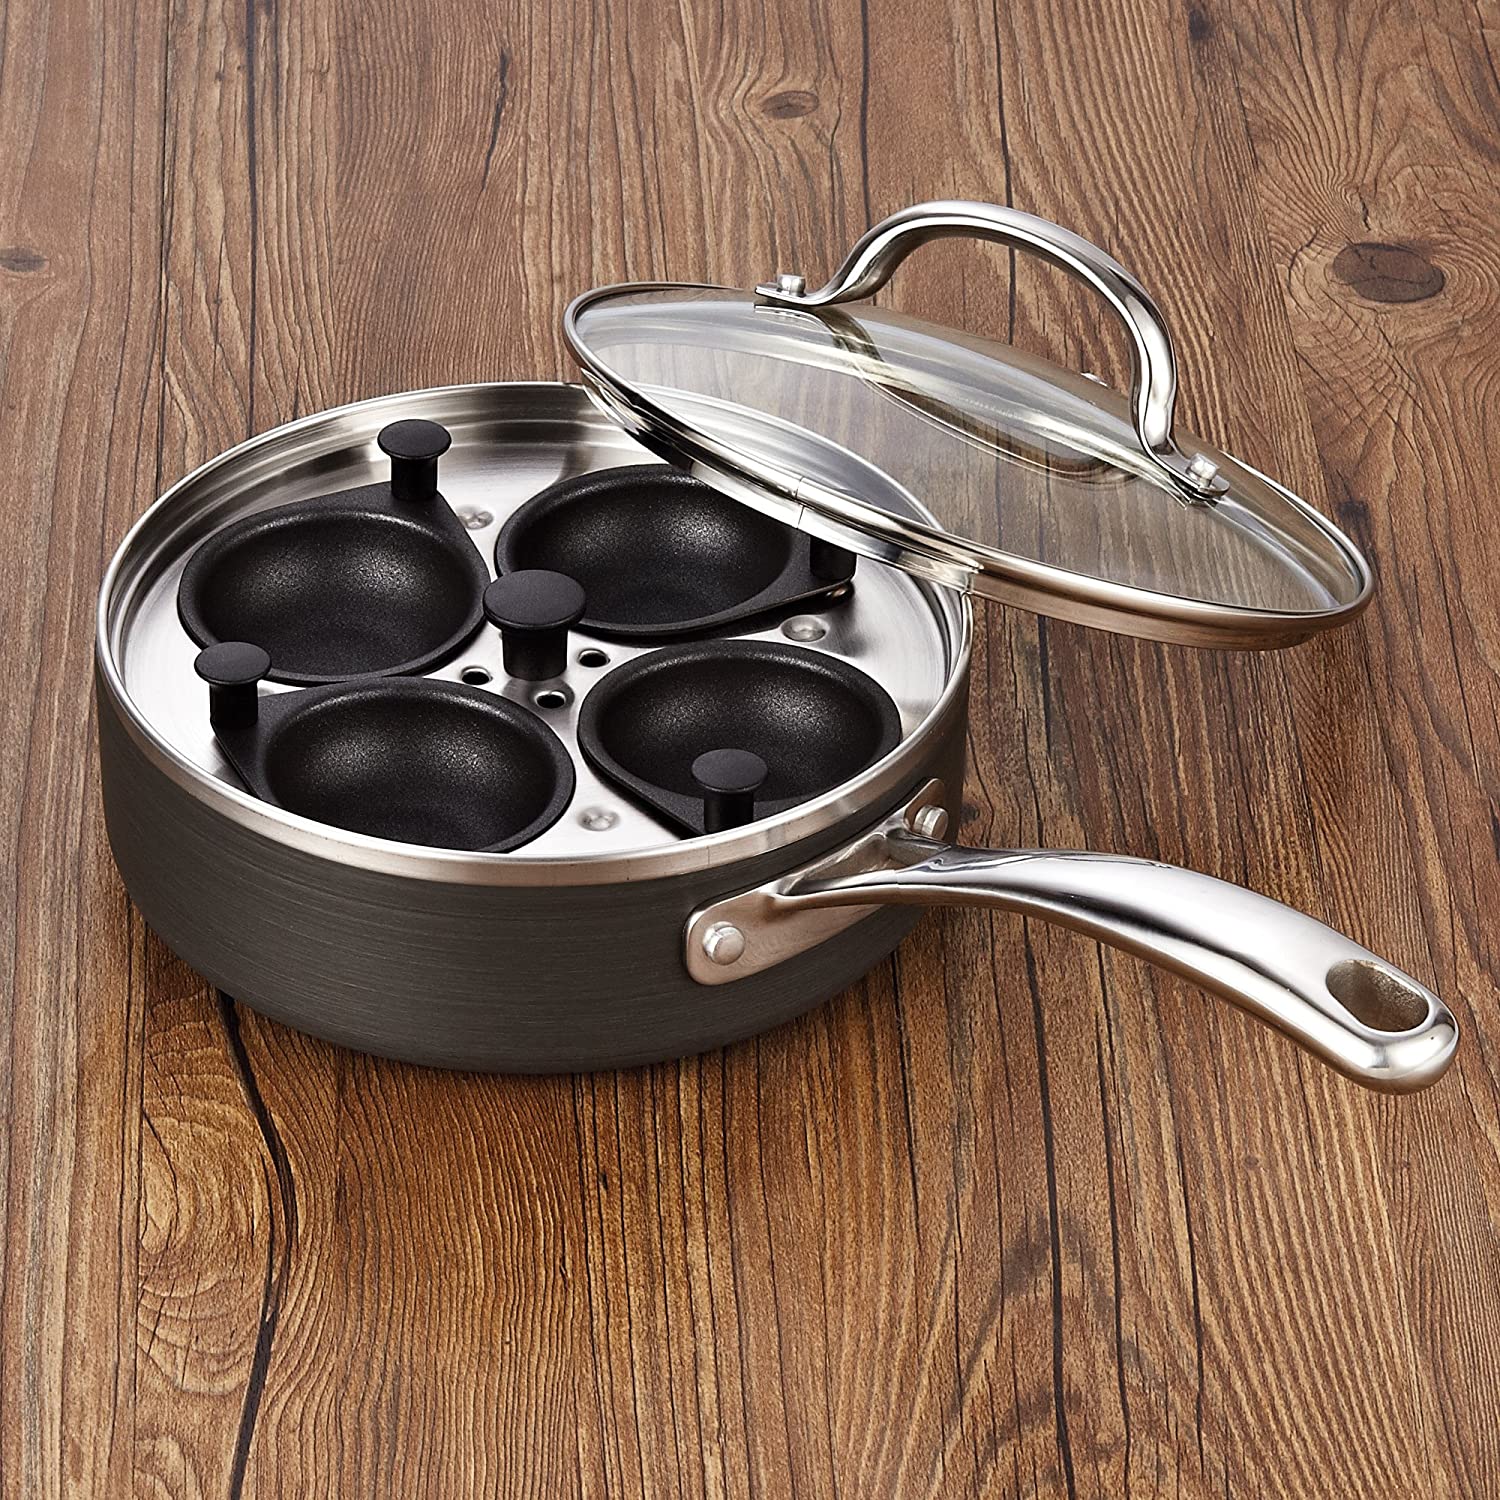 Aluminum 4-Cup Egg Frying Pan, Non Stick Egg Cooker Pan